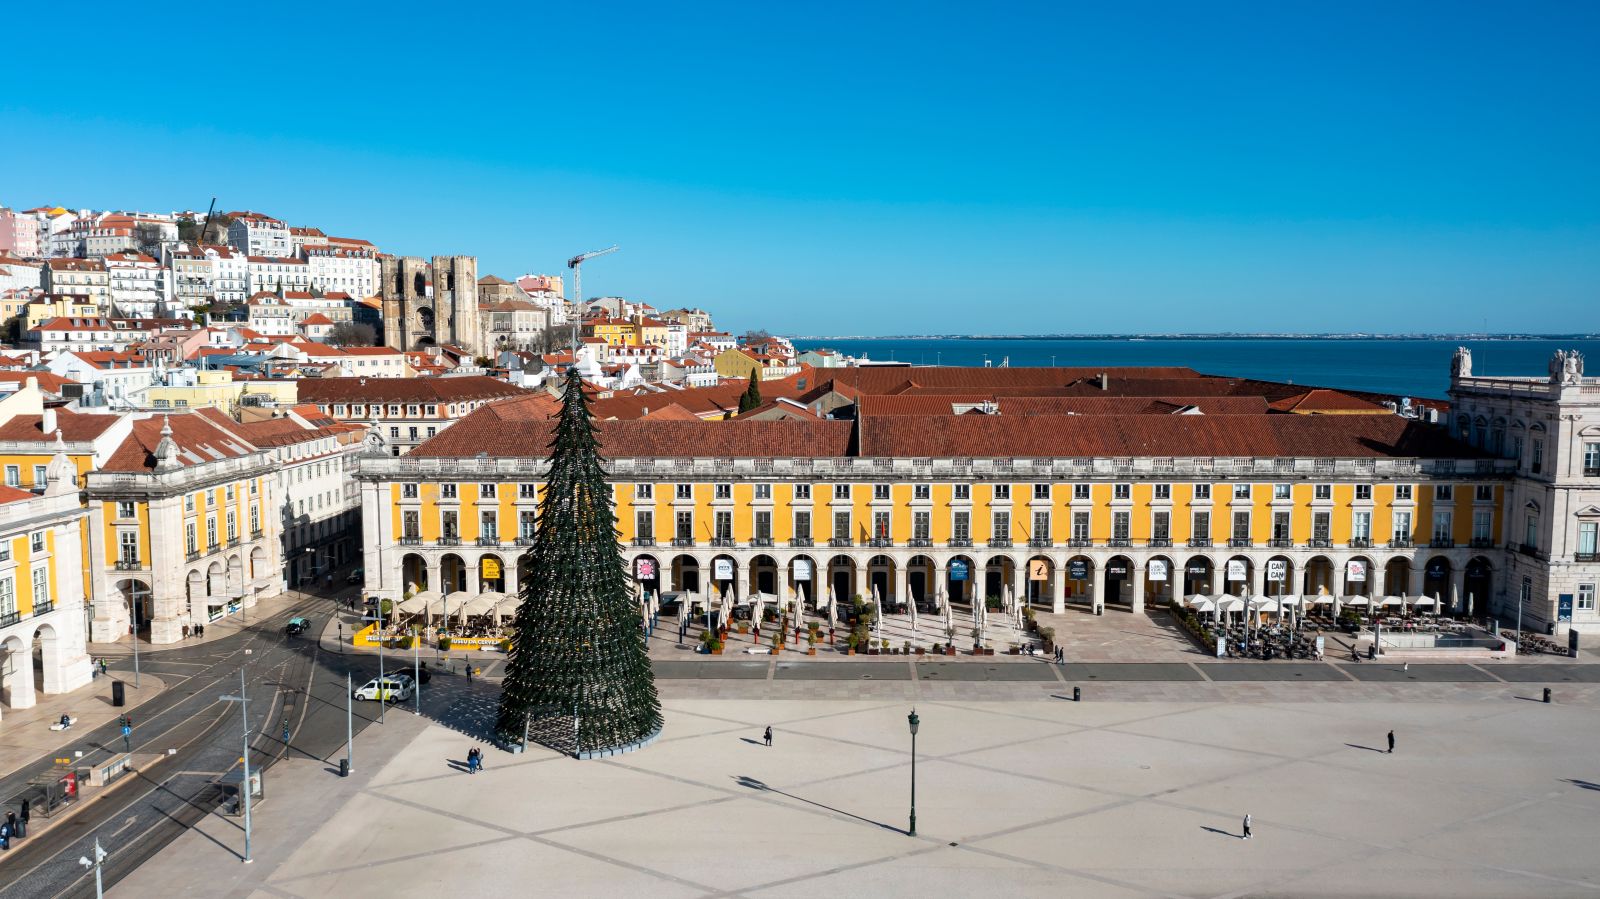 Praça do Comércio during winter season, decorated with a Christmas tree.